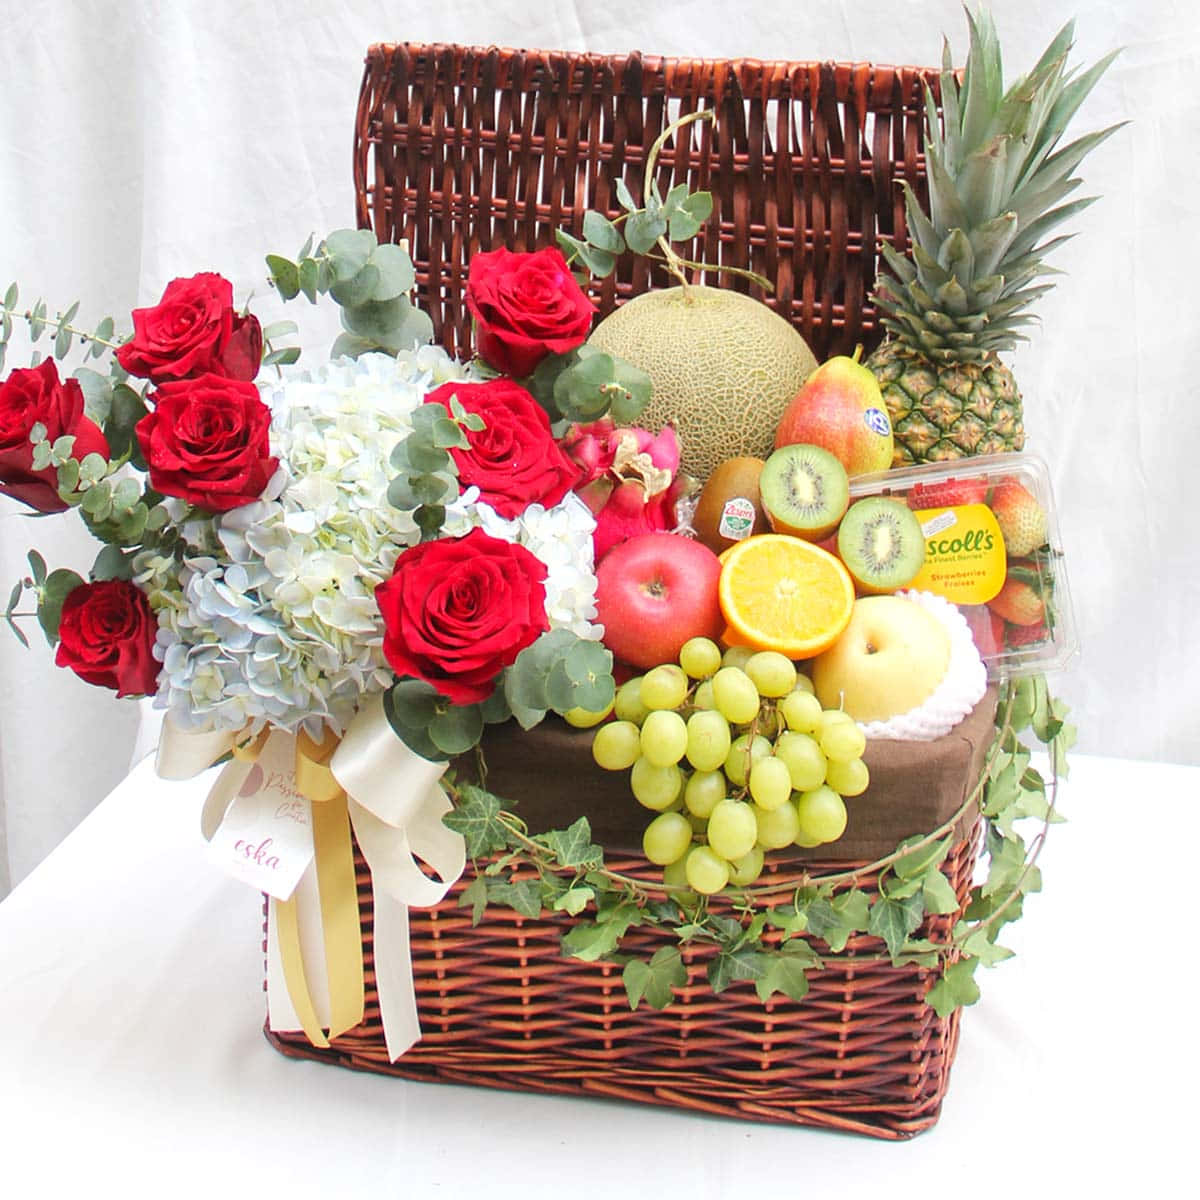 Enjoying a basket of delicious fruit!